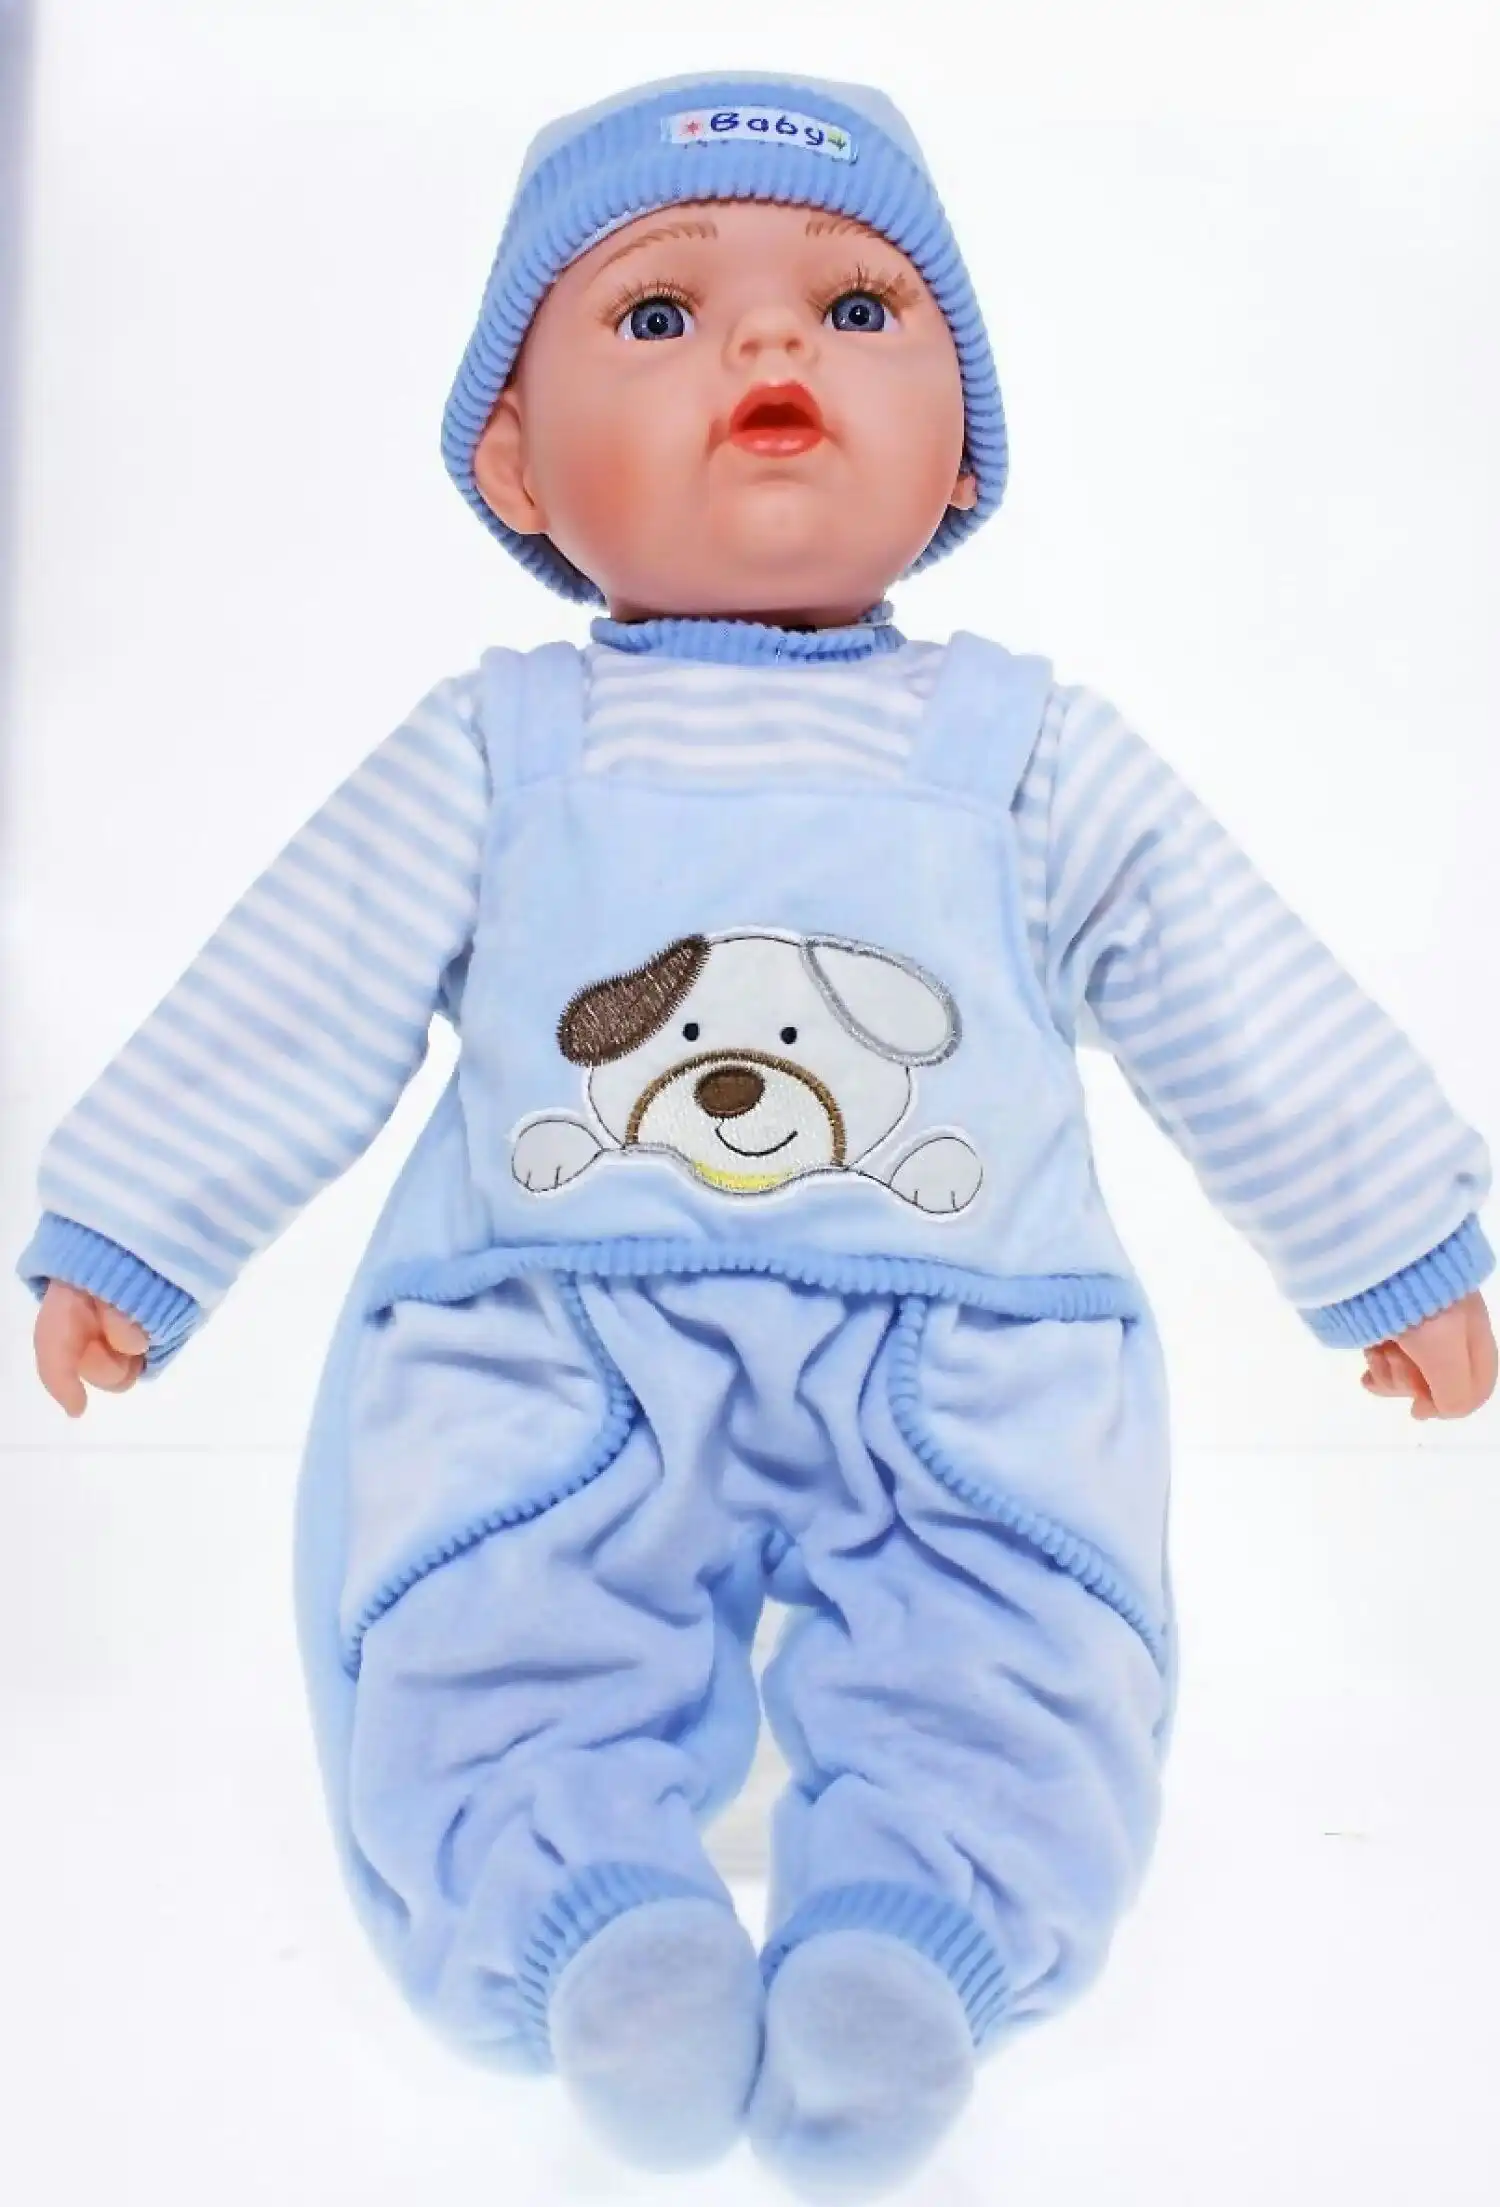 Cotton Candy - Baby Doll Josh - Blue Fleece Overalls